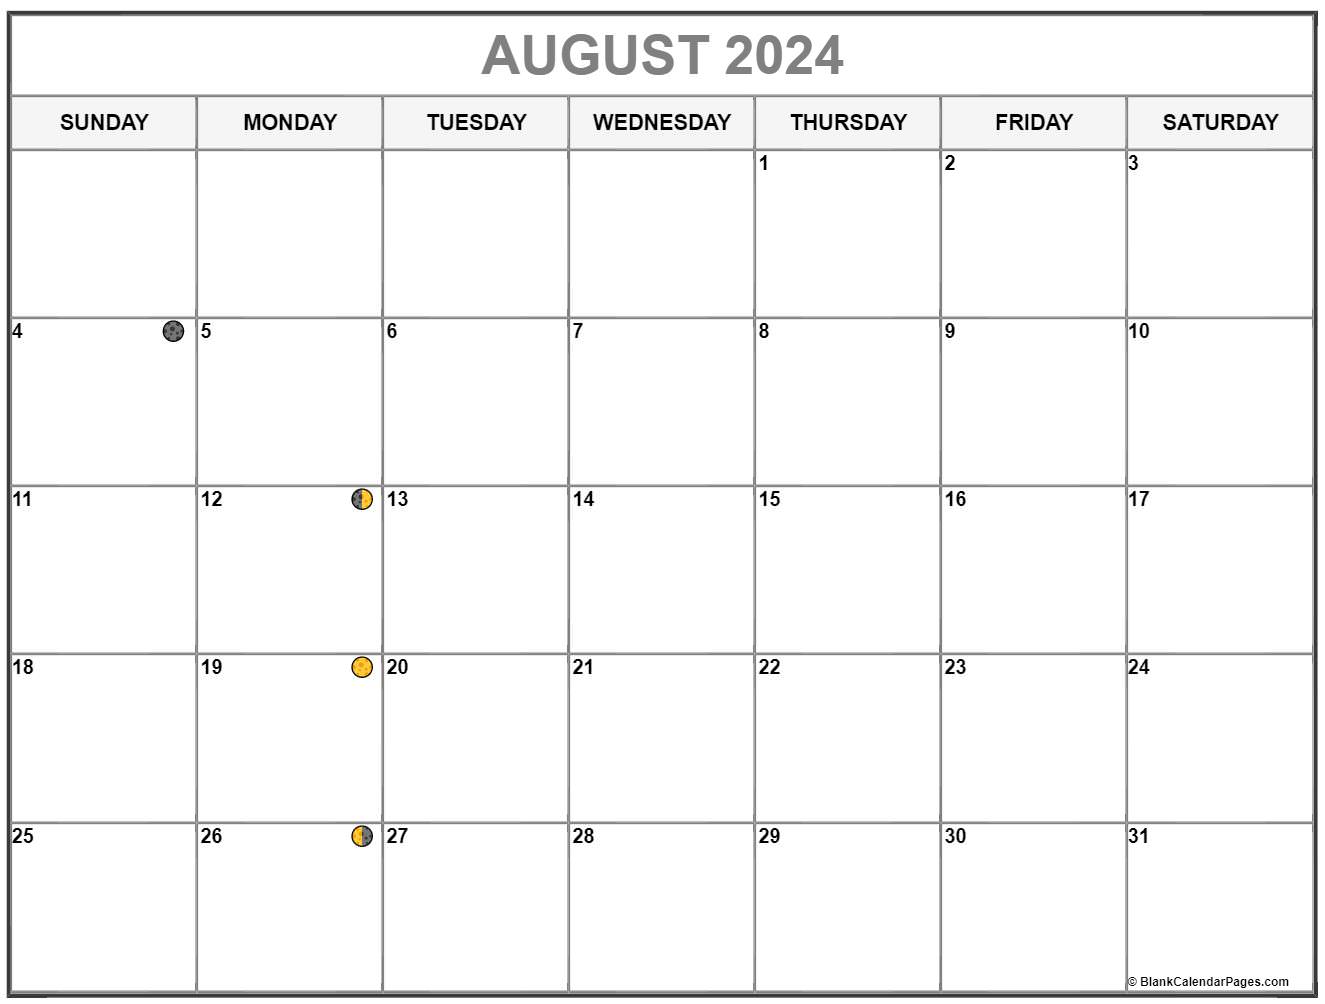 Lunar Calendar August 2022 August 2022 Lunar Calendar | Moon Phase Calendar